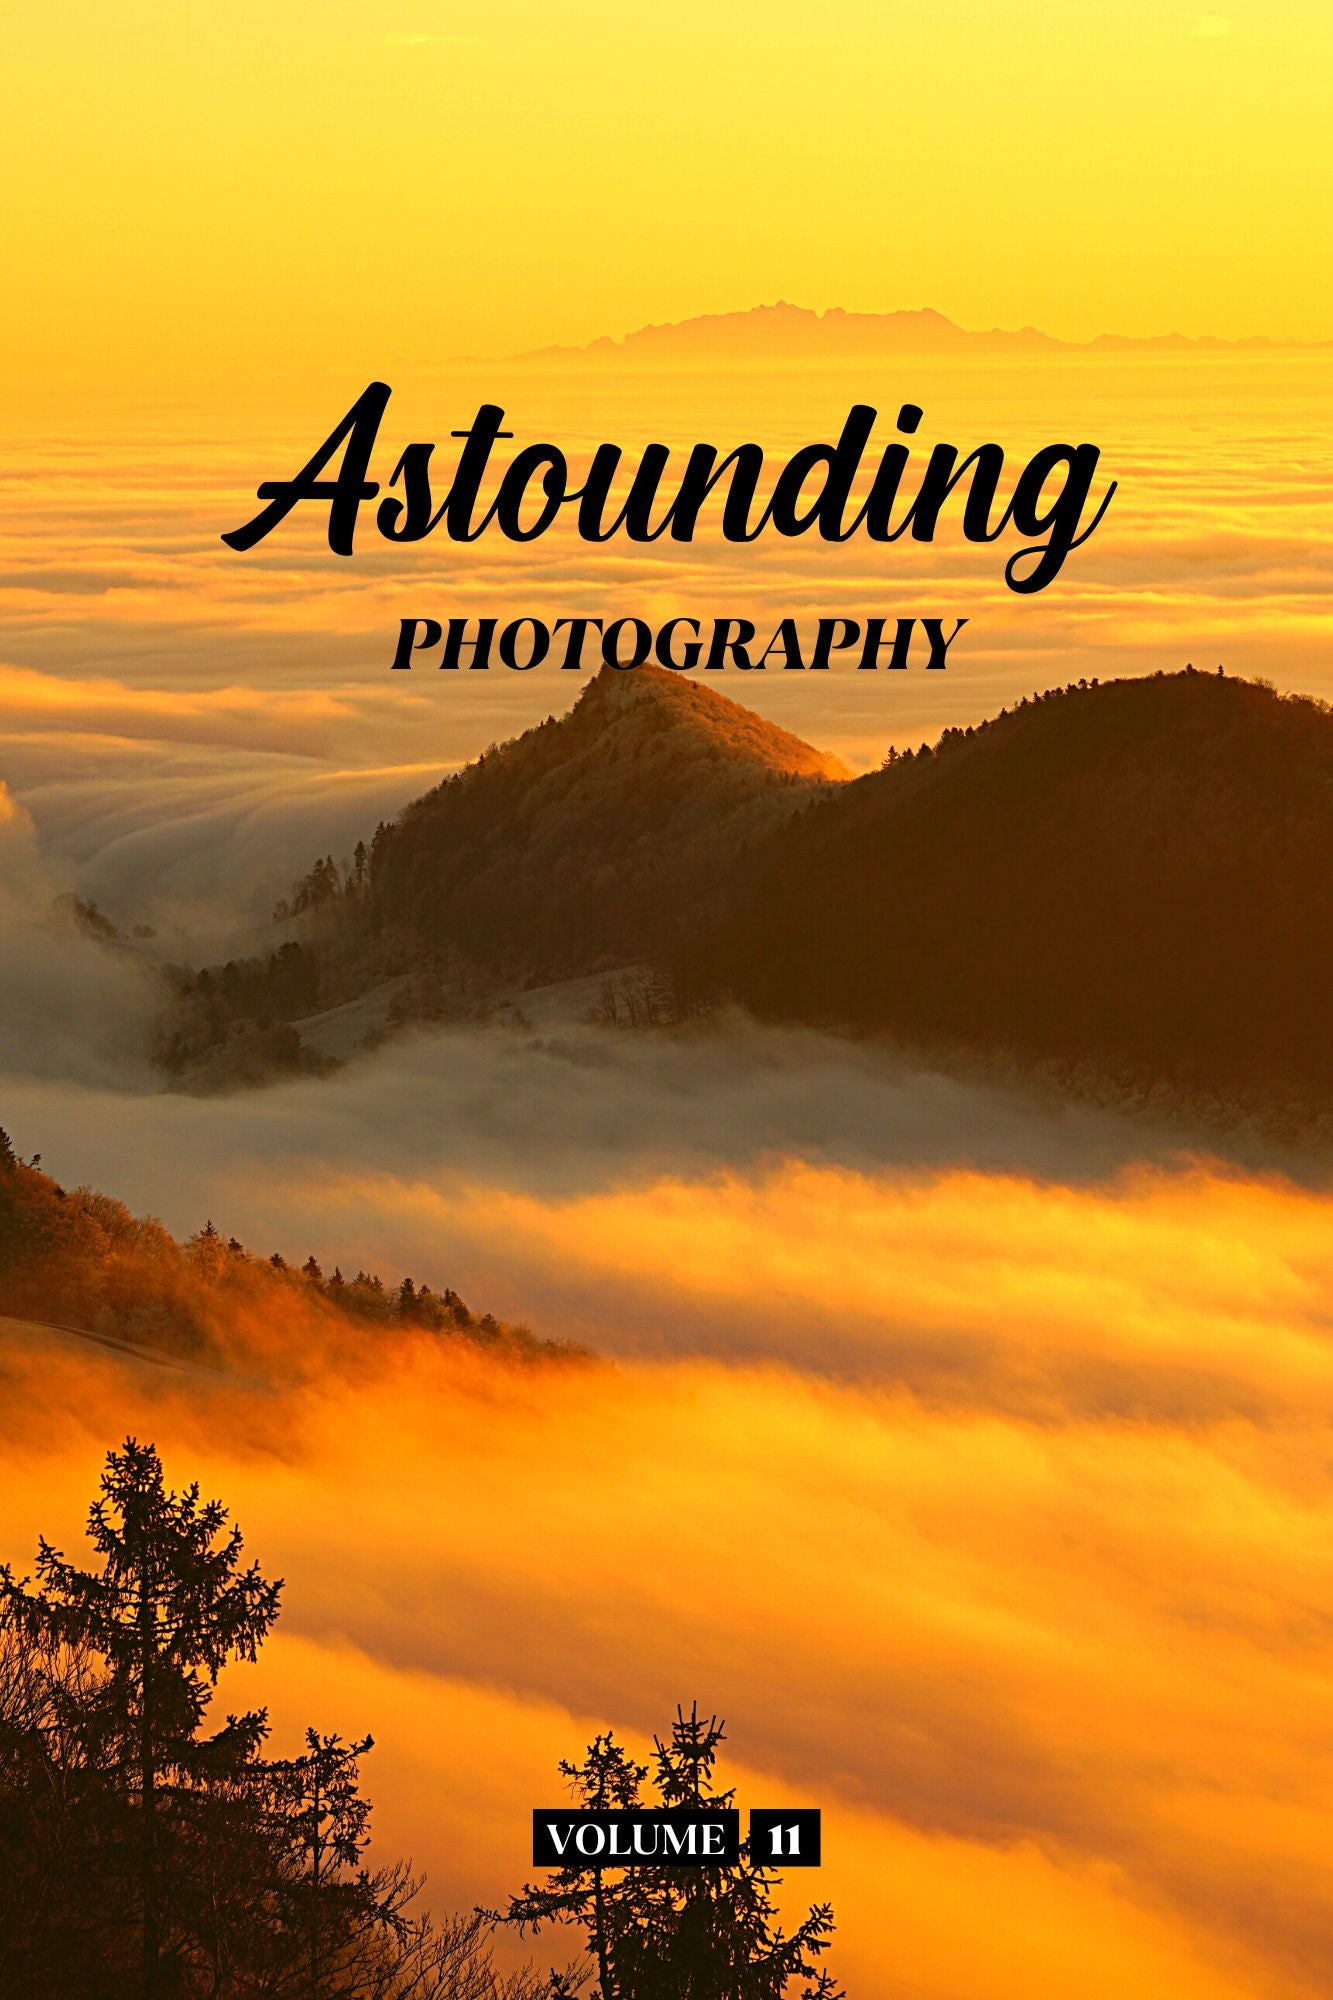 Astounding Photography Volume 11 (Physical Book)